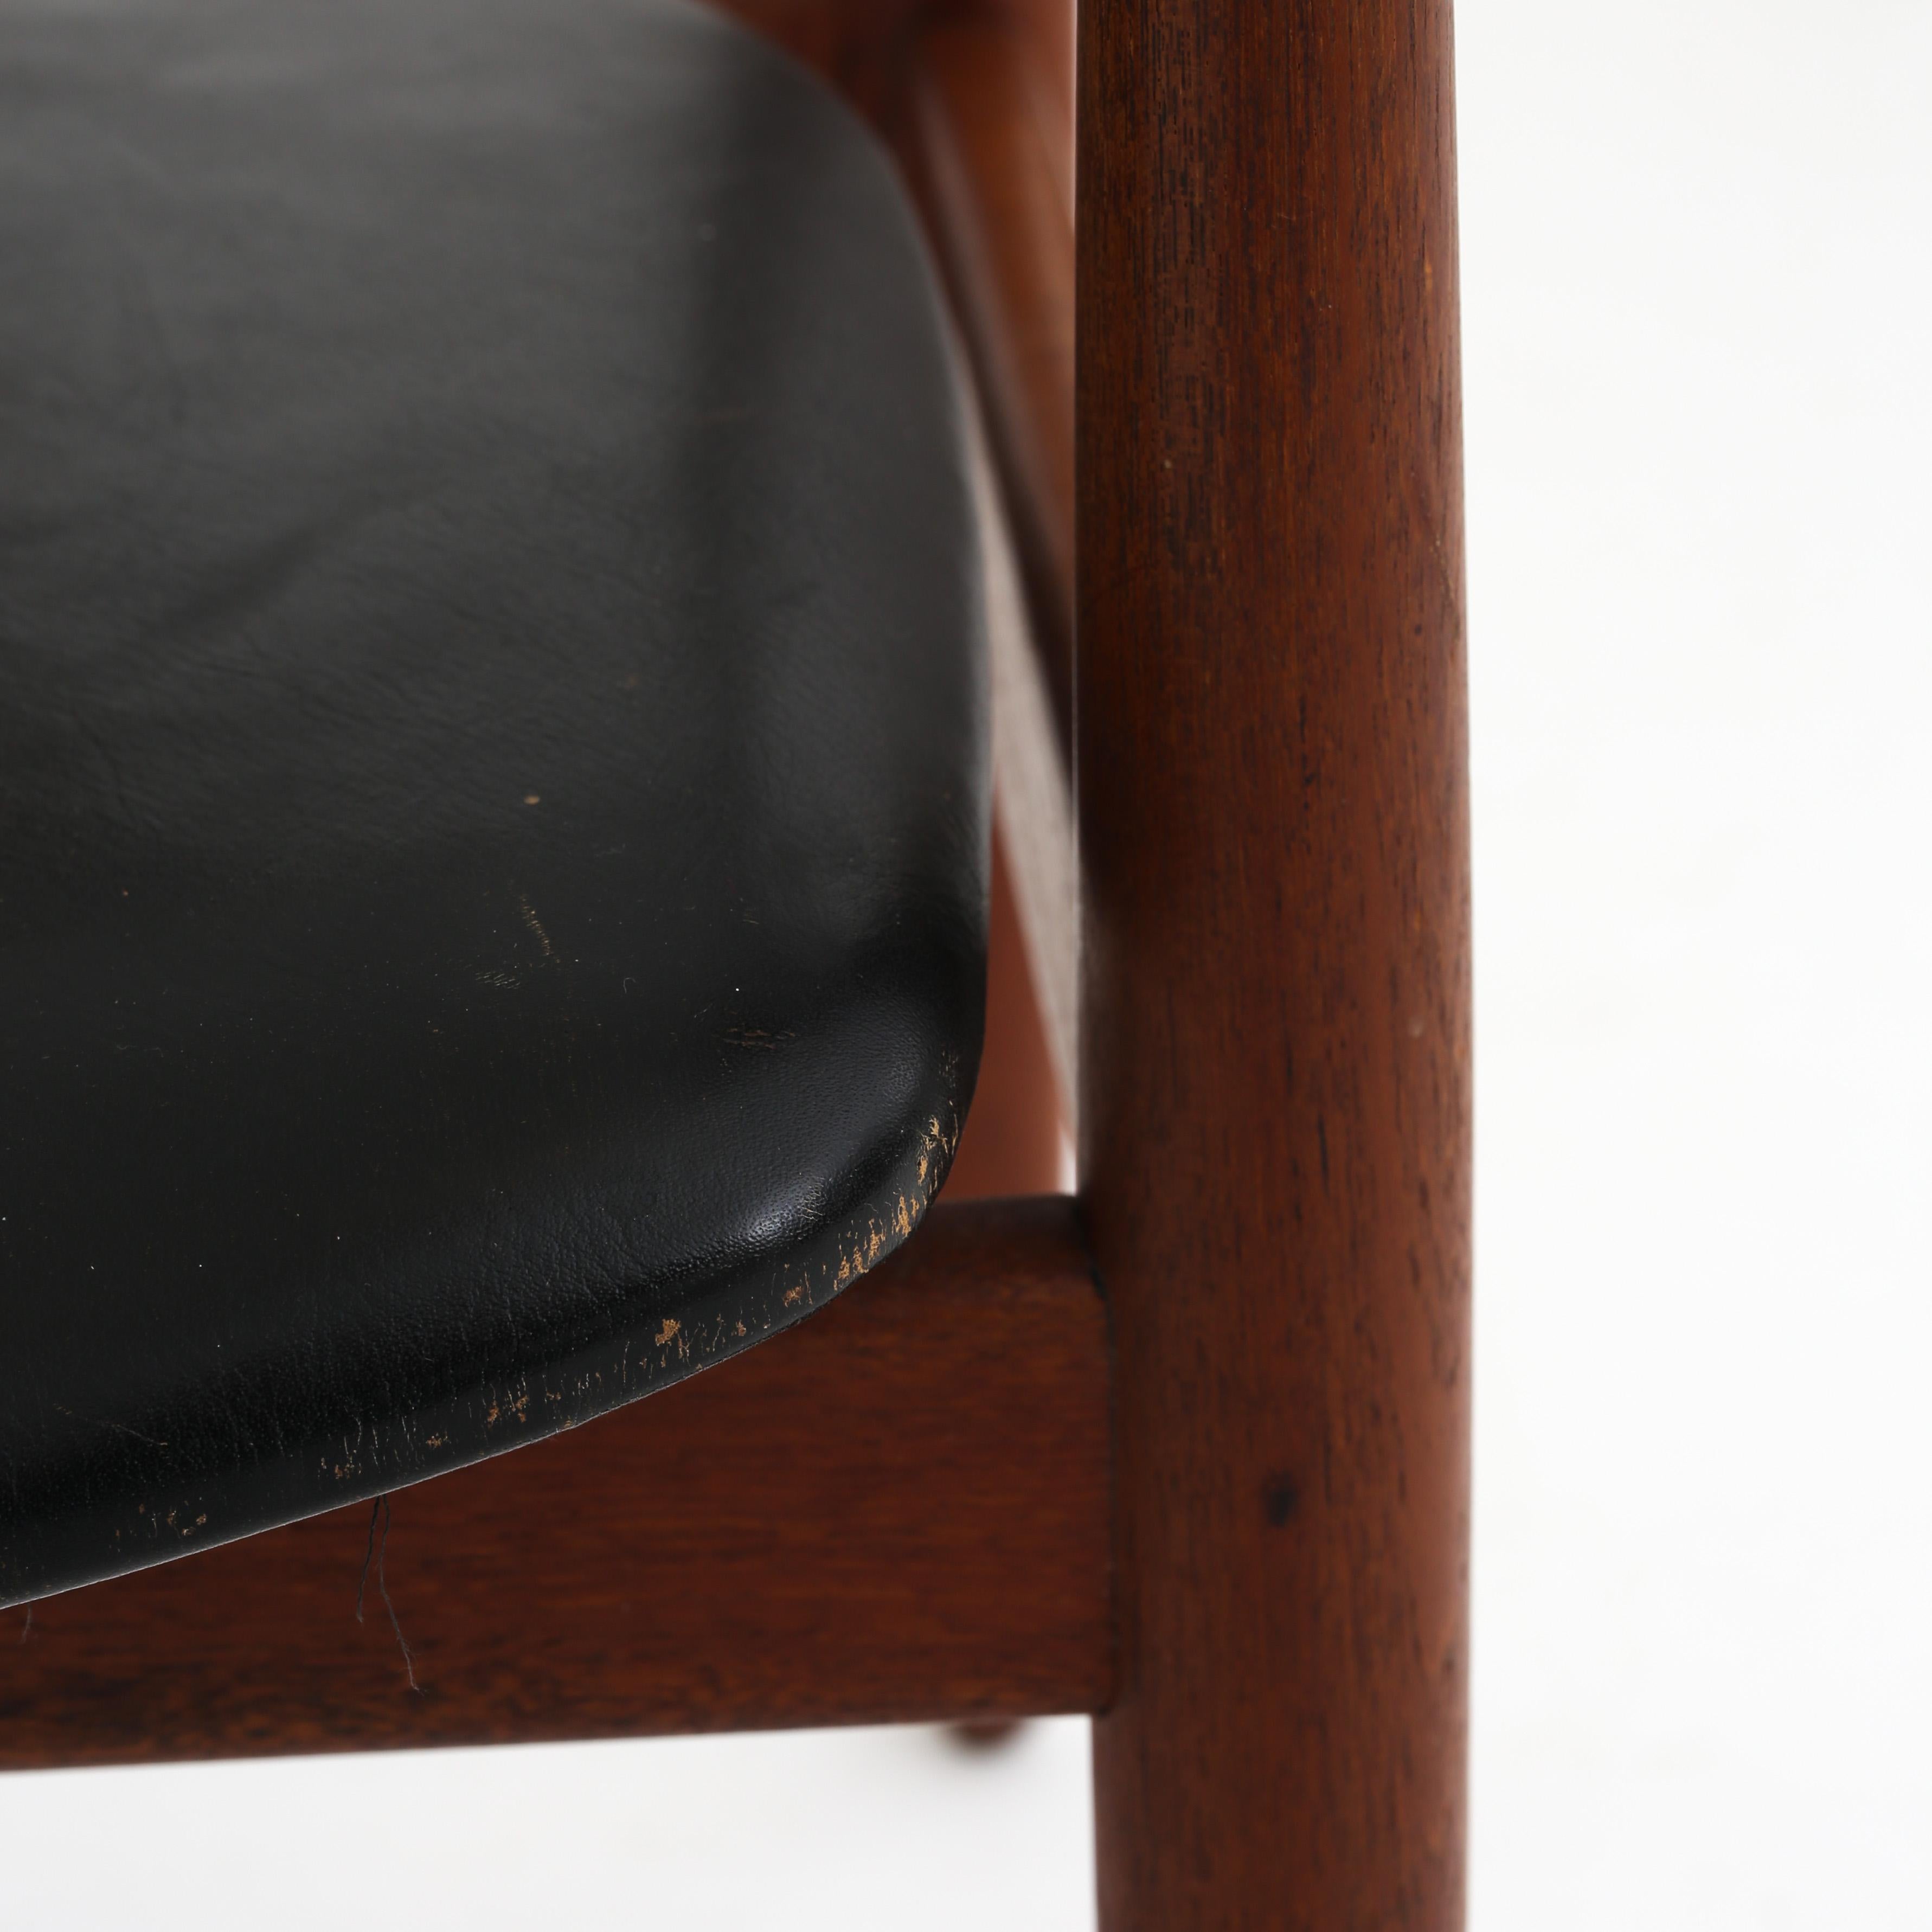 Tove & Edvard Kindt Larsen / Sorø Stolefabrik. Armchair in teak and black patinated leather.